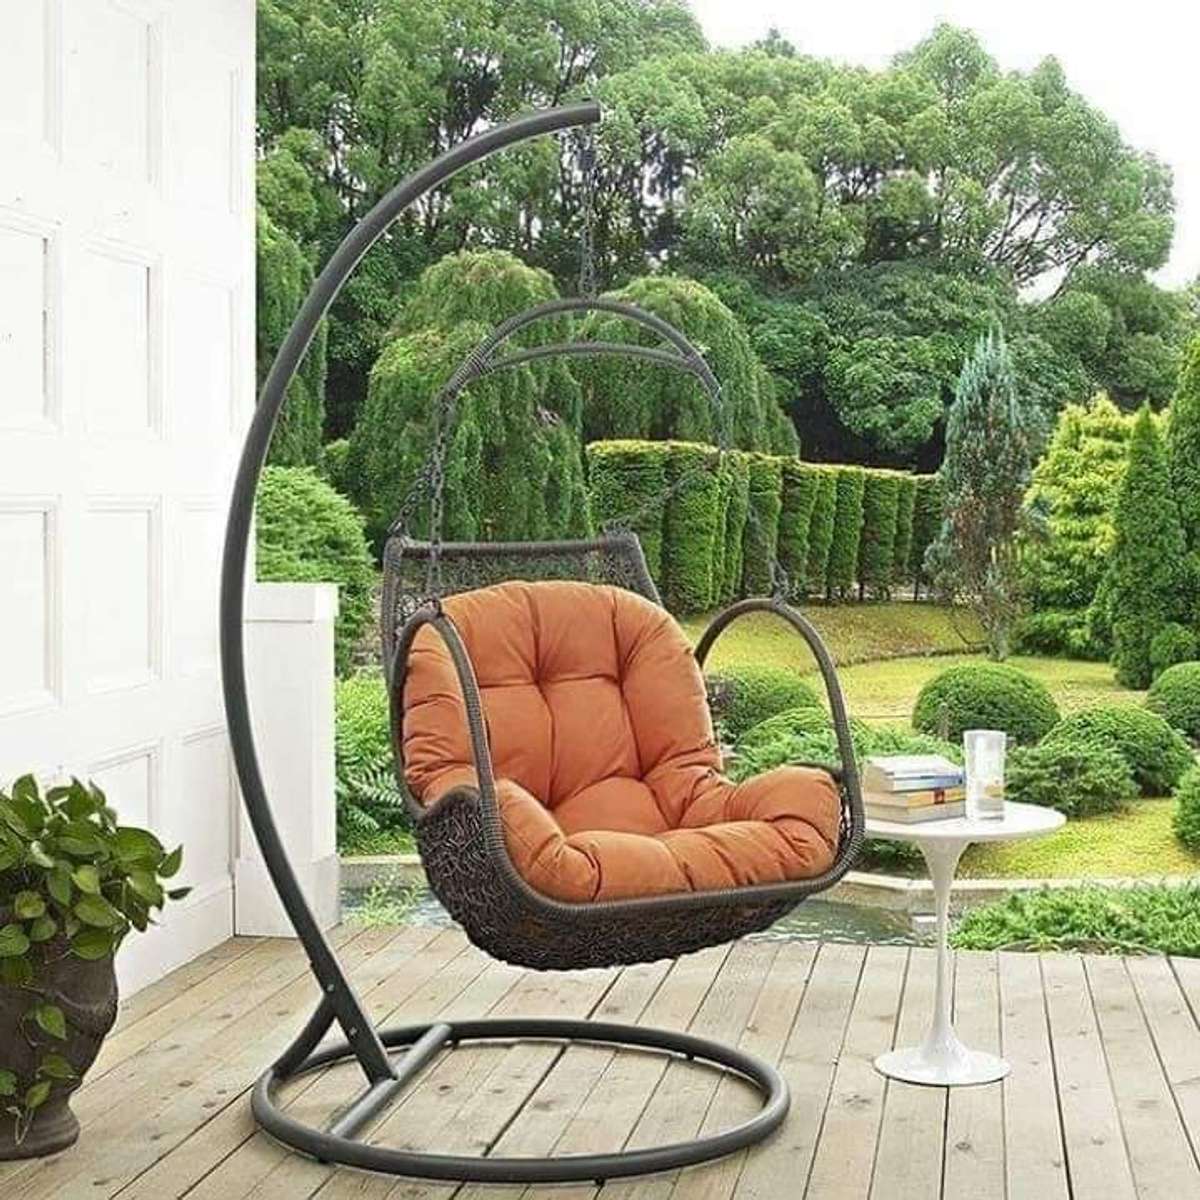 #Hangingchairs

Beutiful hanging chair ideas